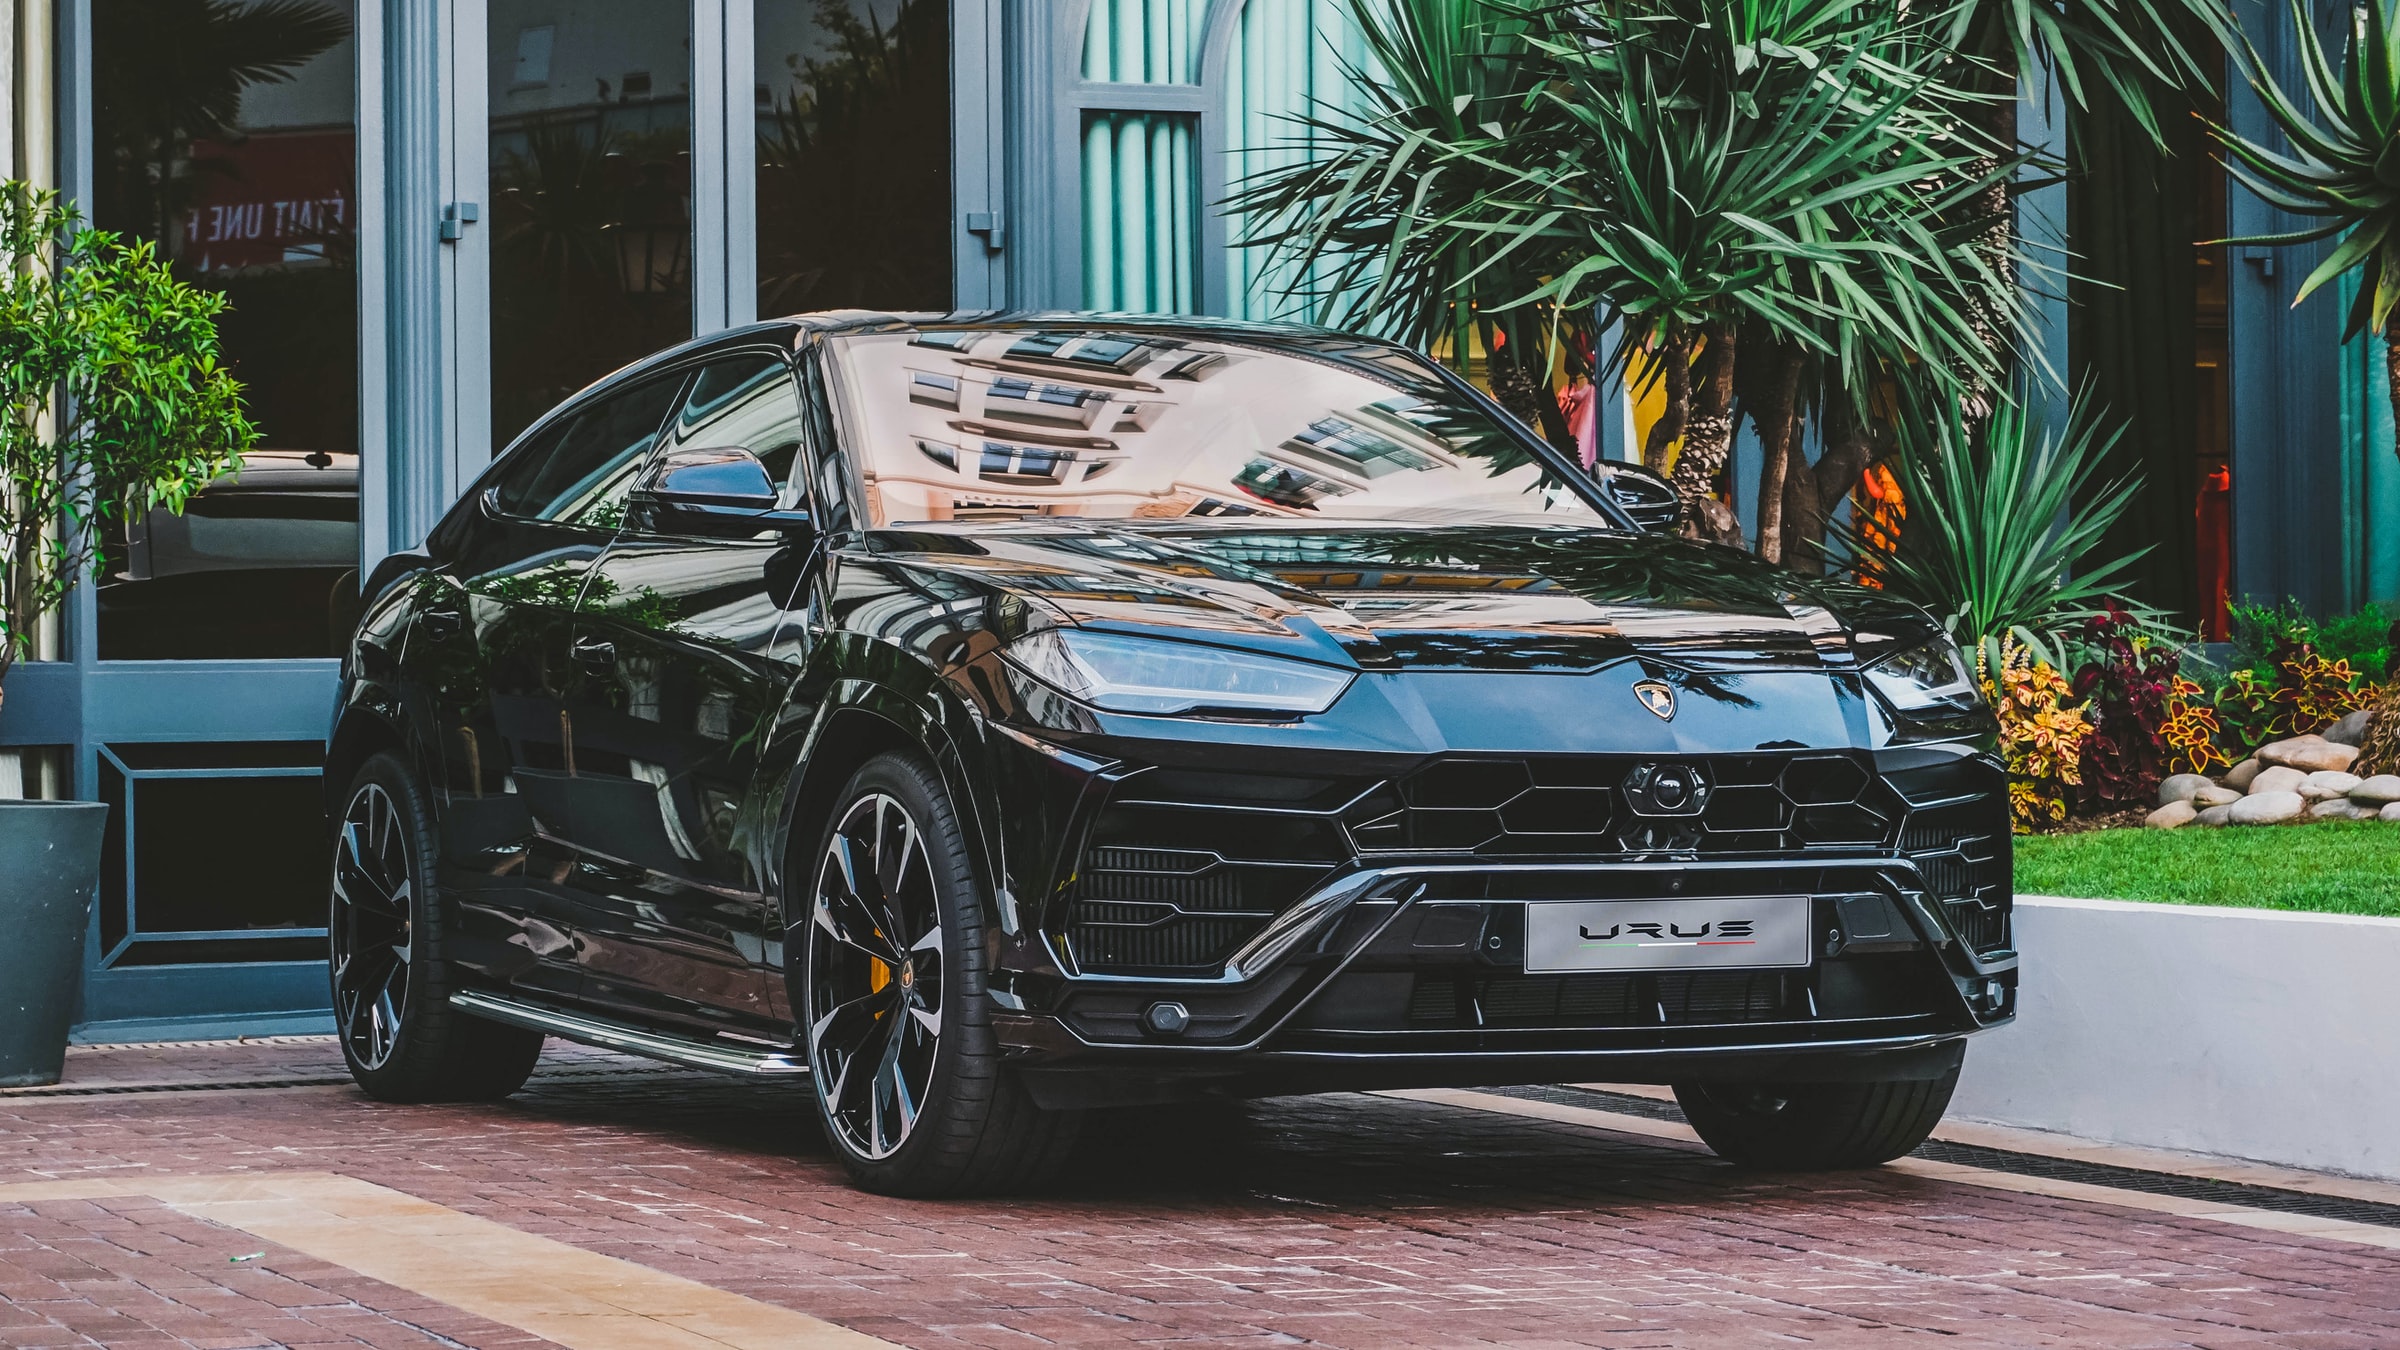 Lamborghini Informatie en prijzen | Autotrack.nl